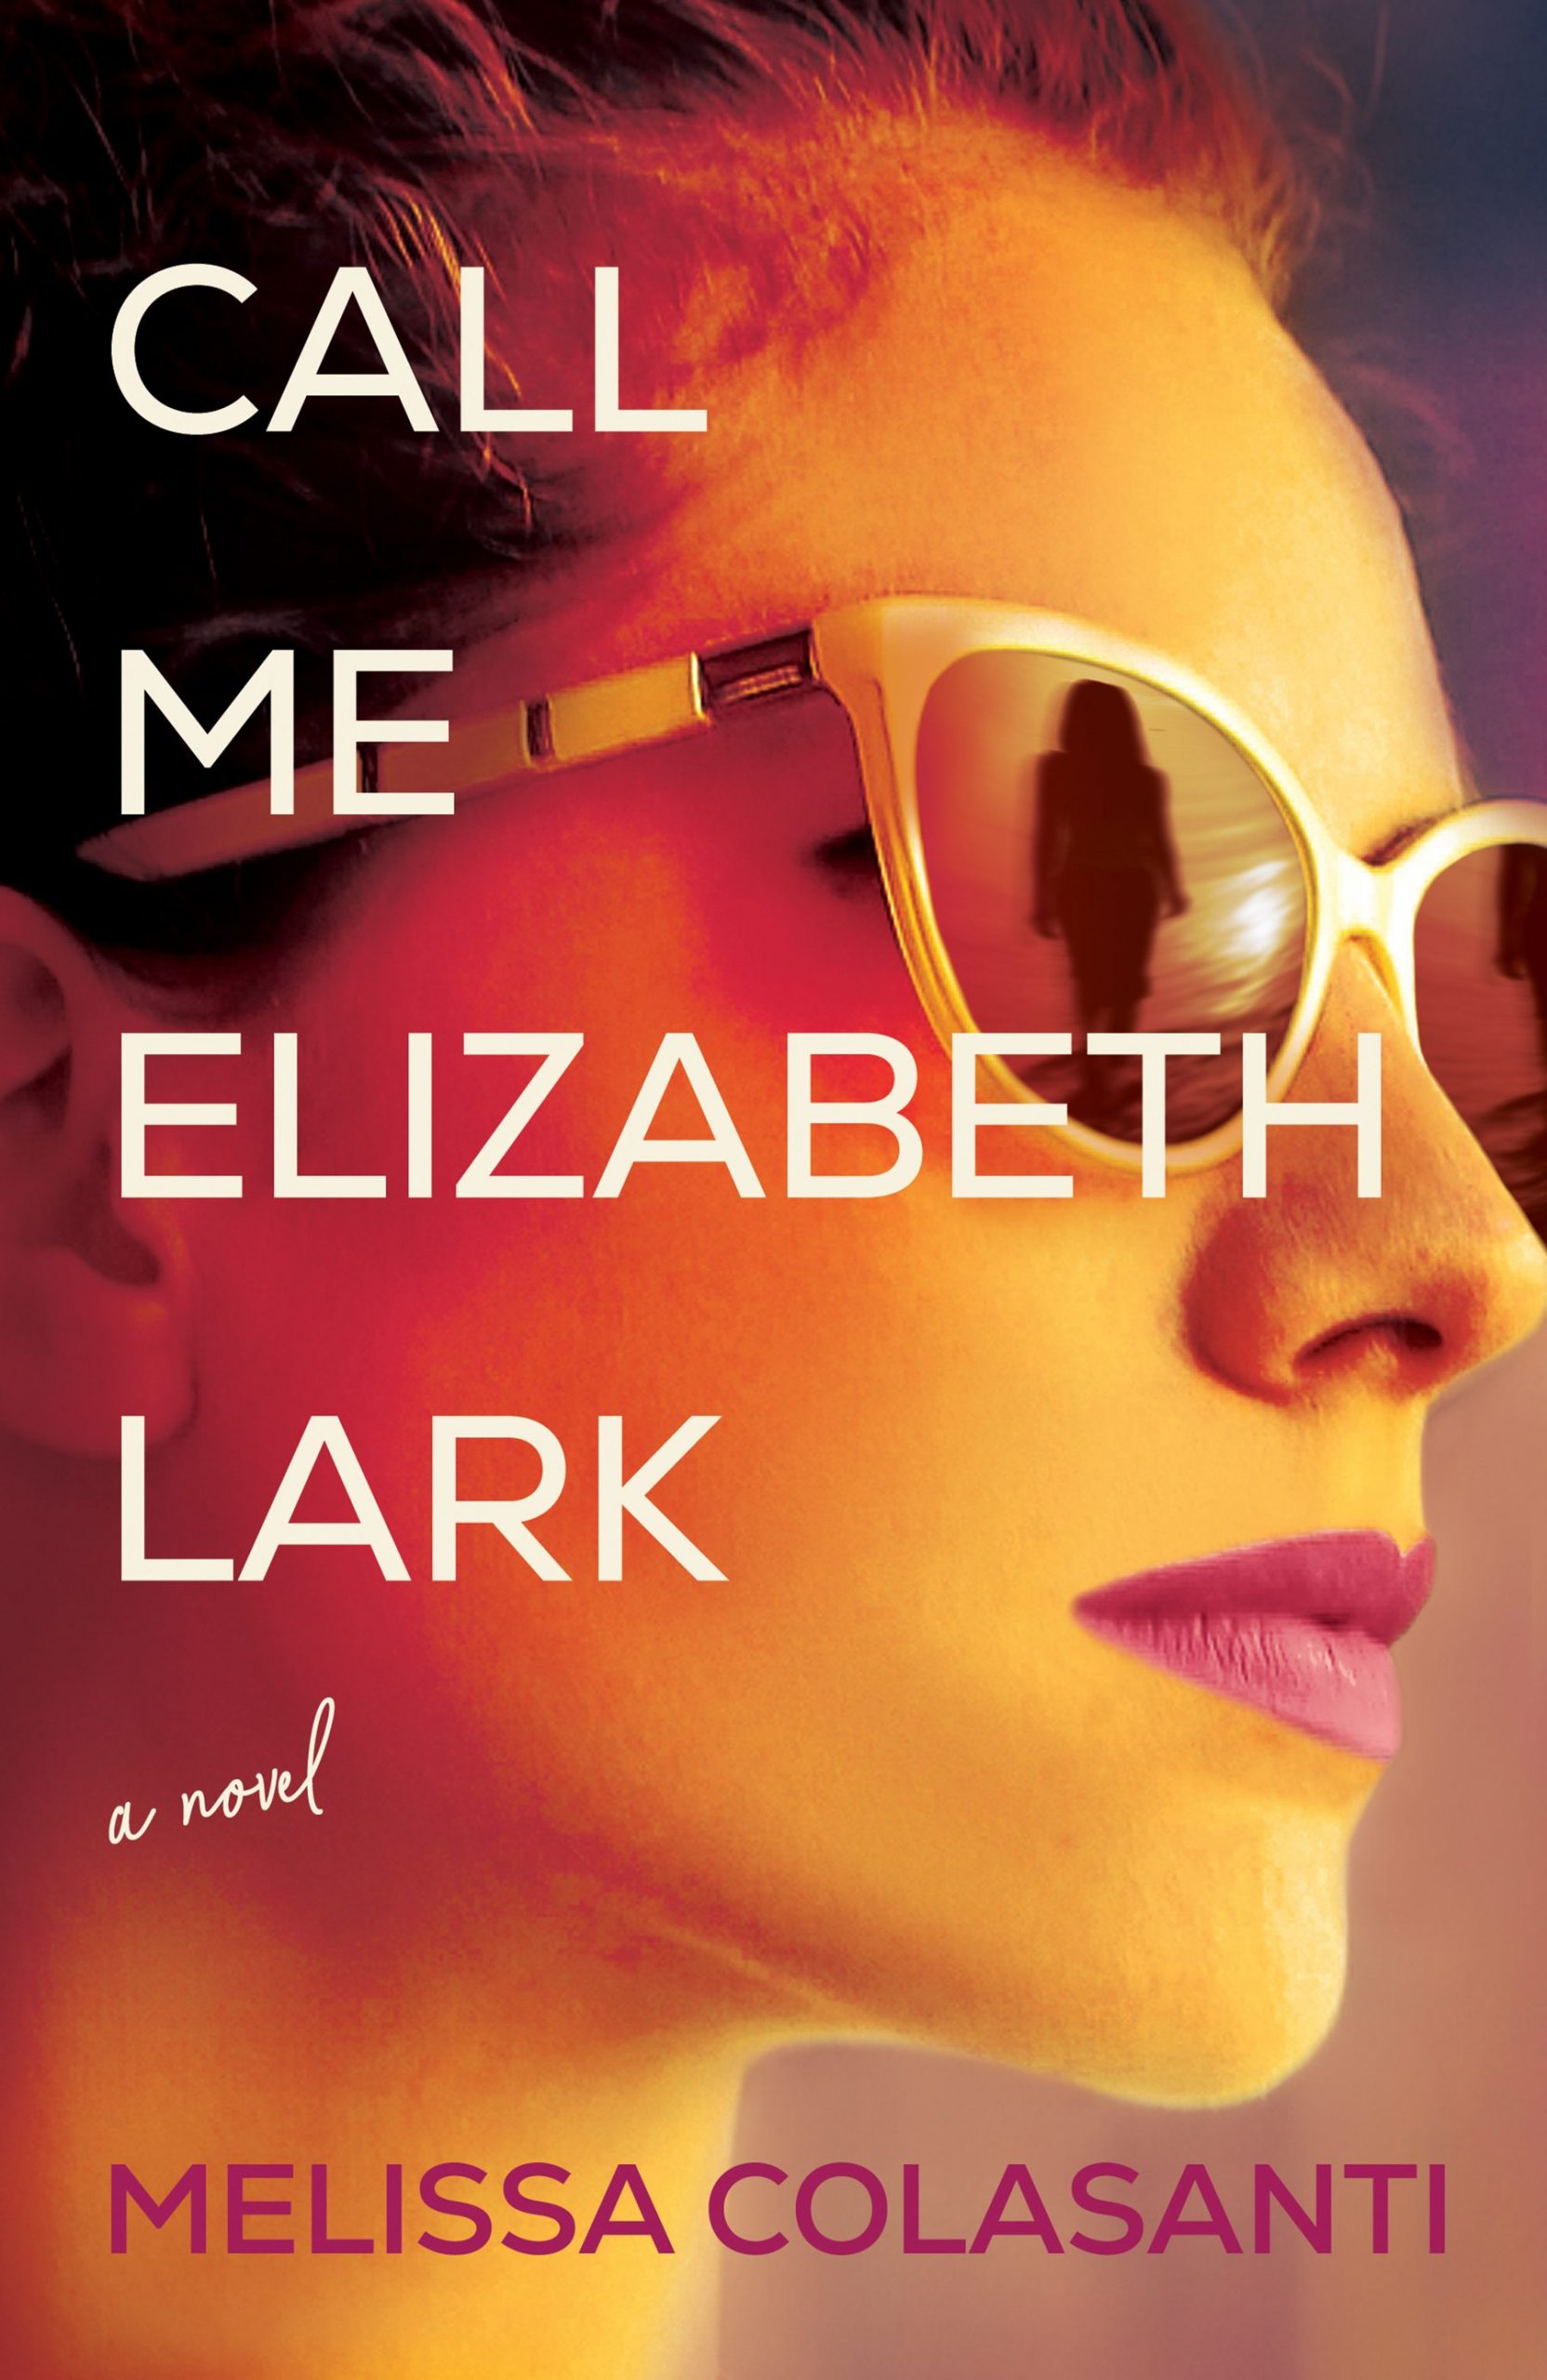 Call Me Elizabeth Lark by Melissa Colasanti